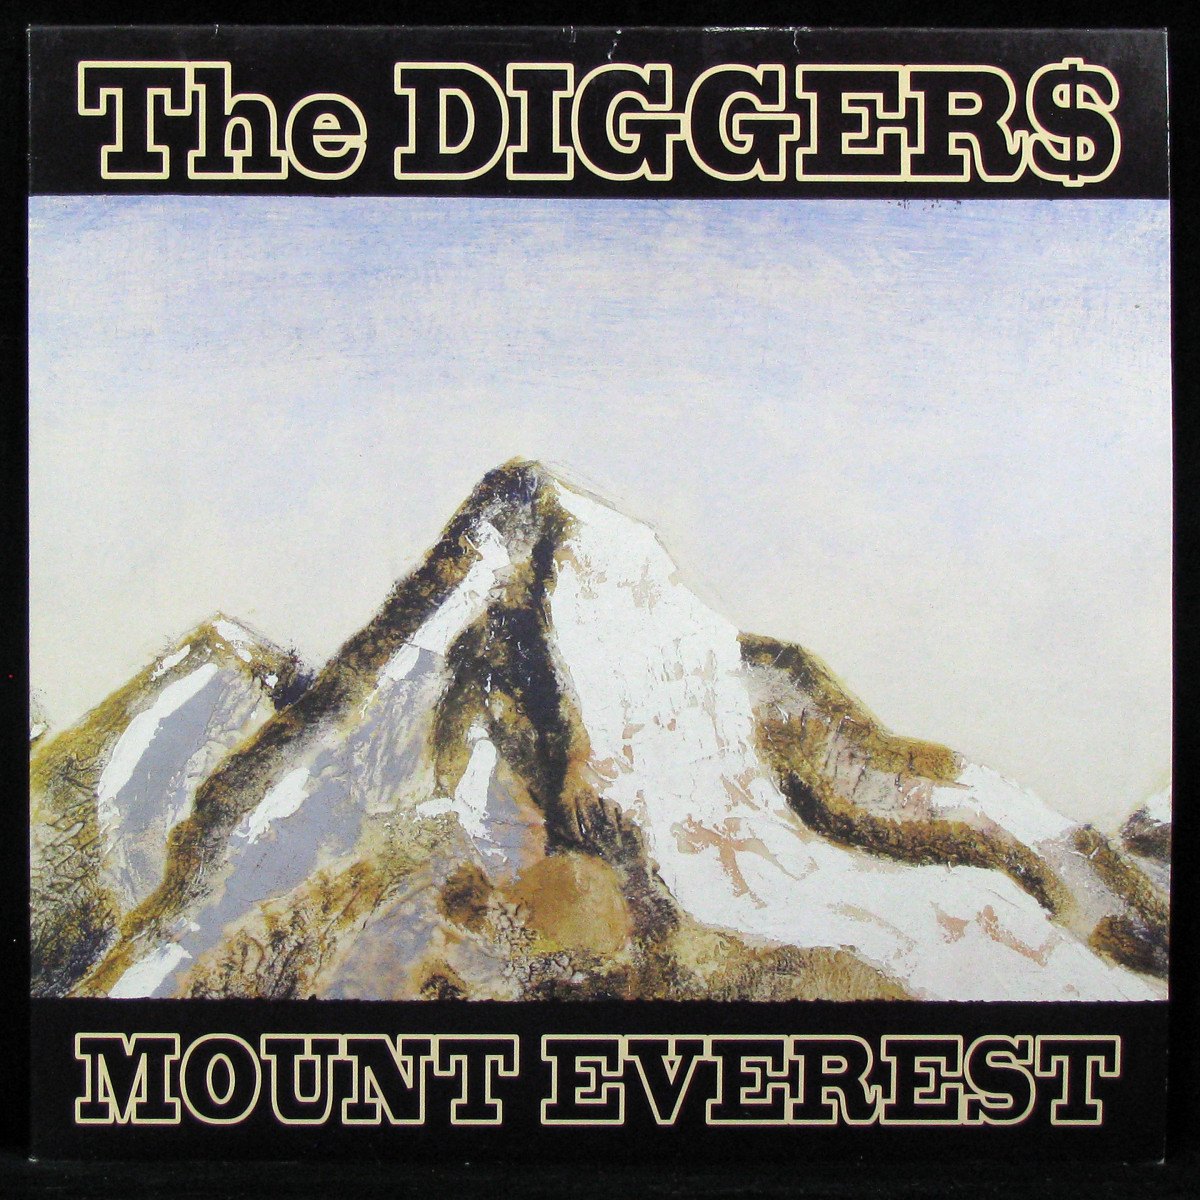 LP Diggers — Mount Everest фото